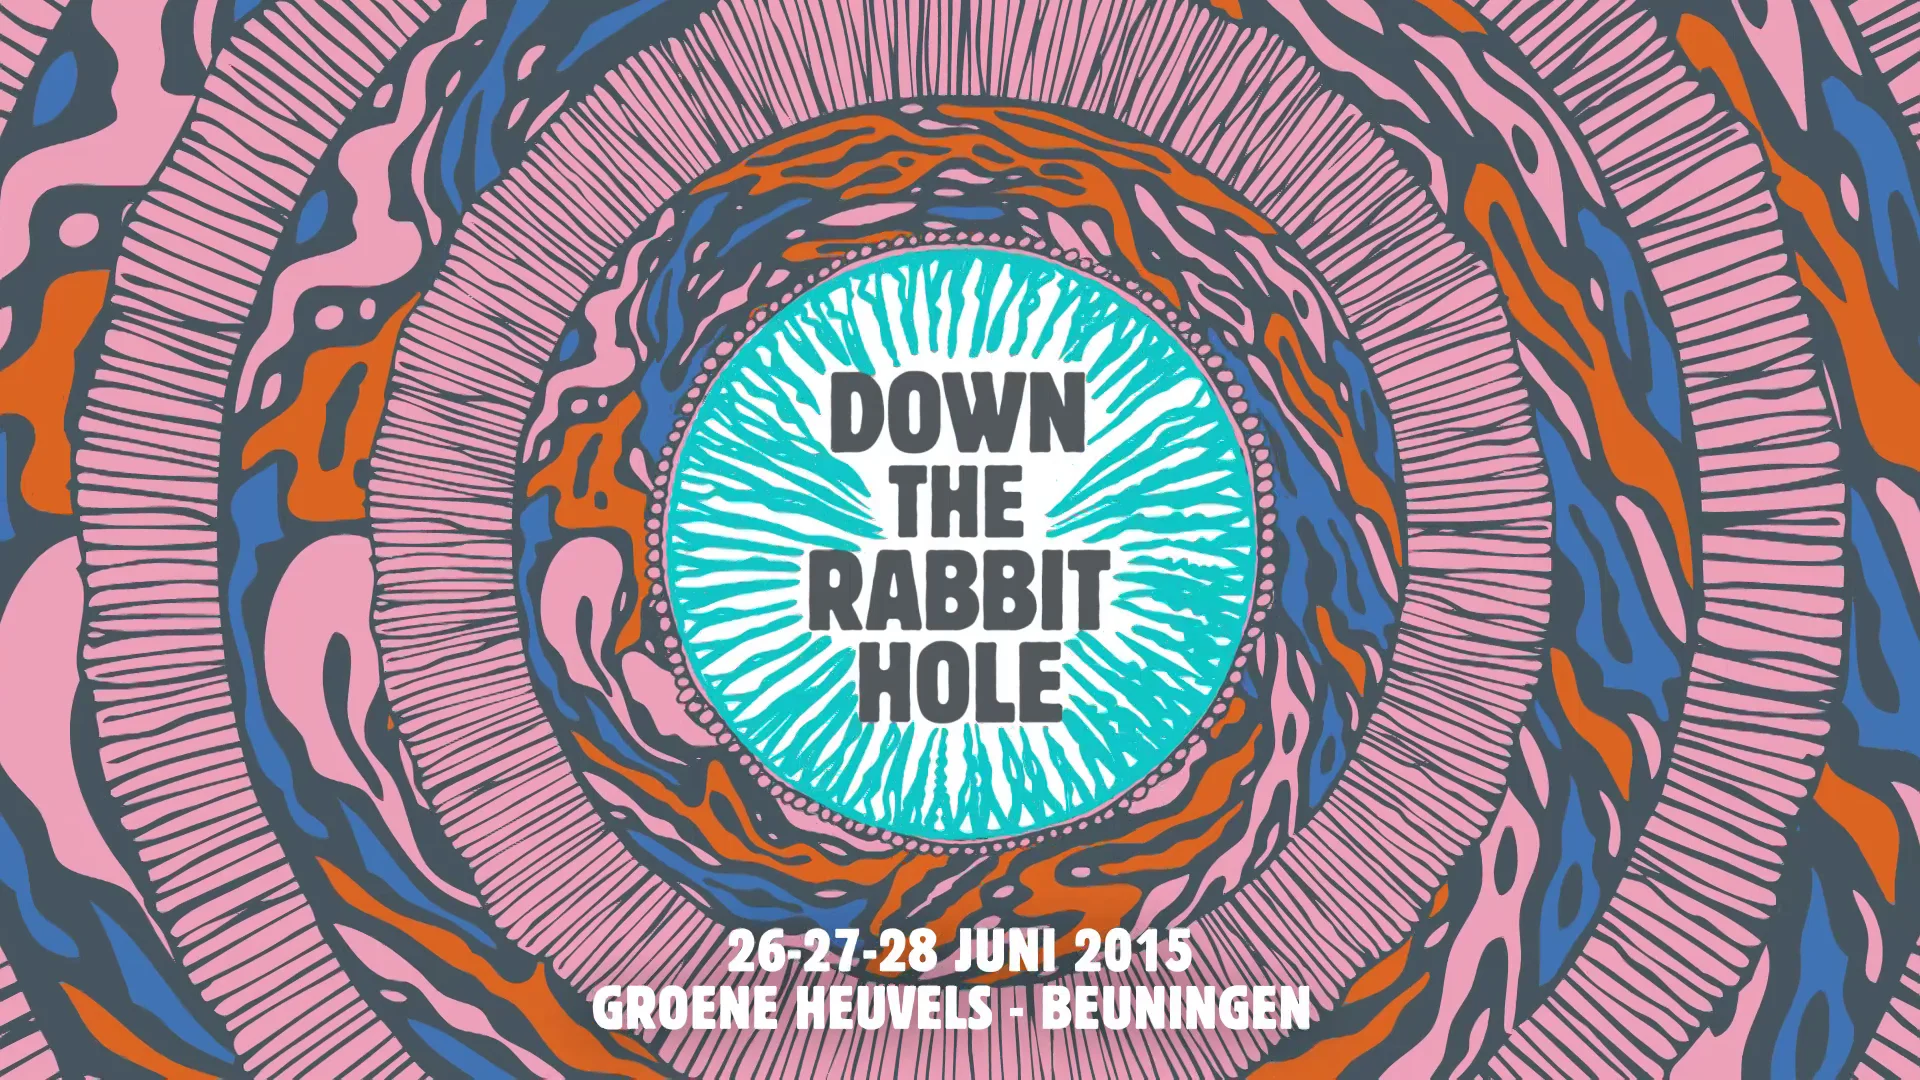 Rabbit hole full version. Rabbit hole. Down the Rabbit hole. Обои Rabbit hole. Rabbit hole animation.